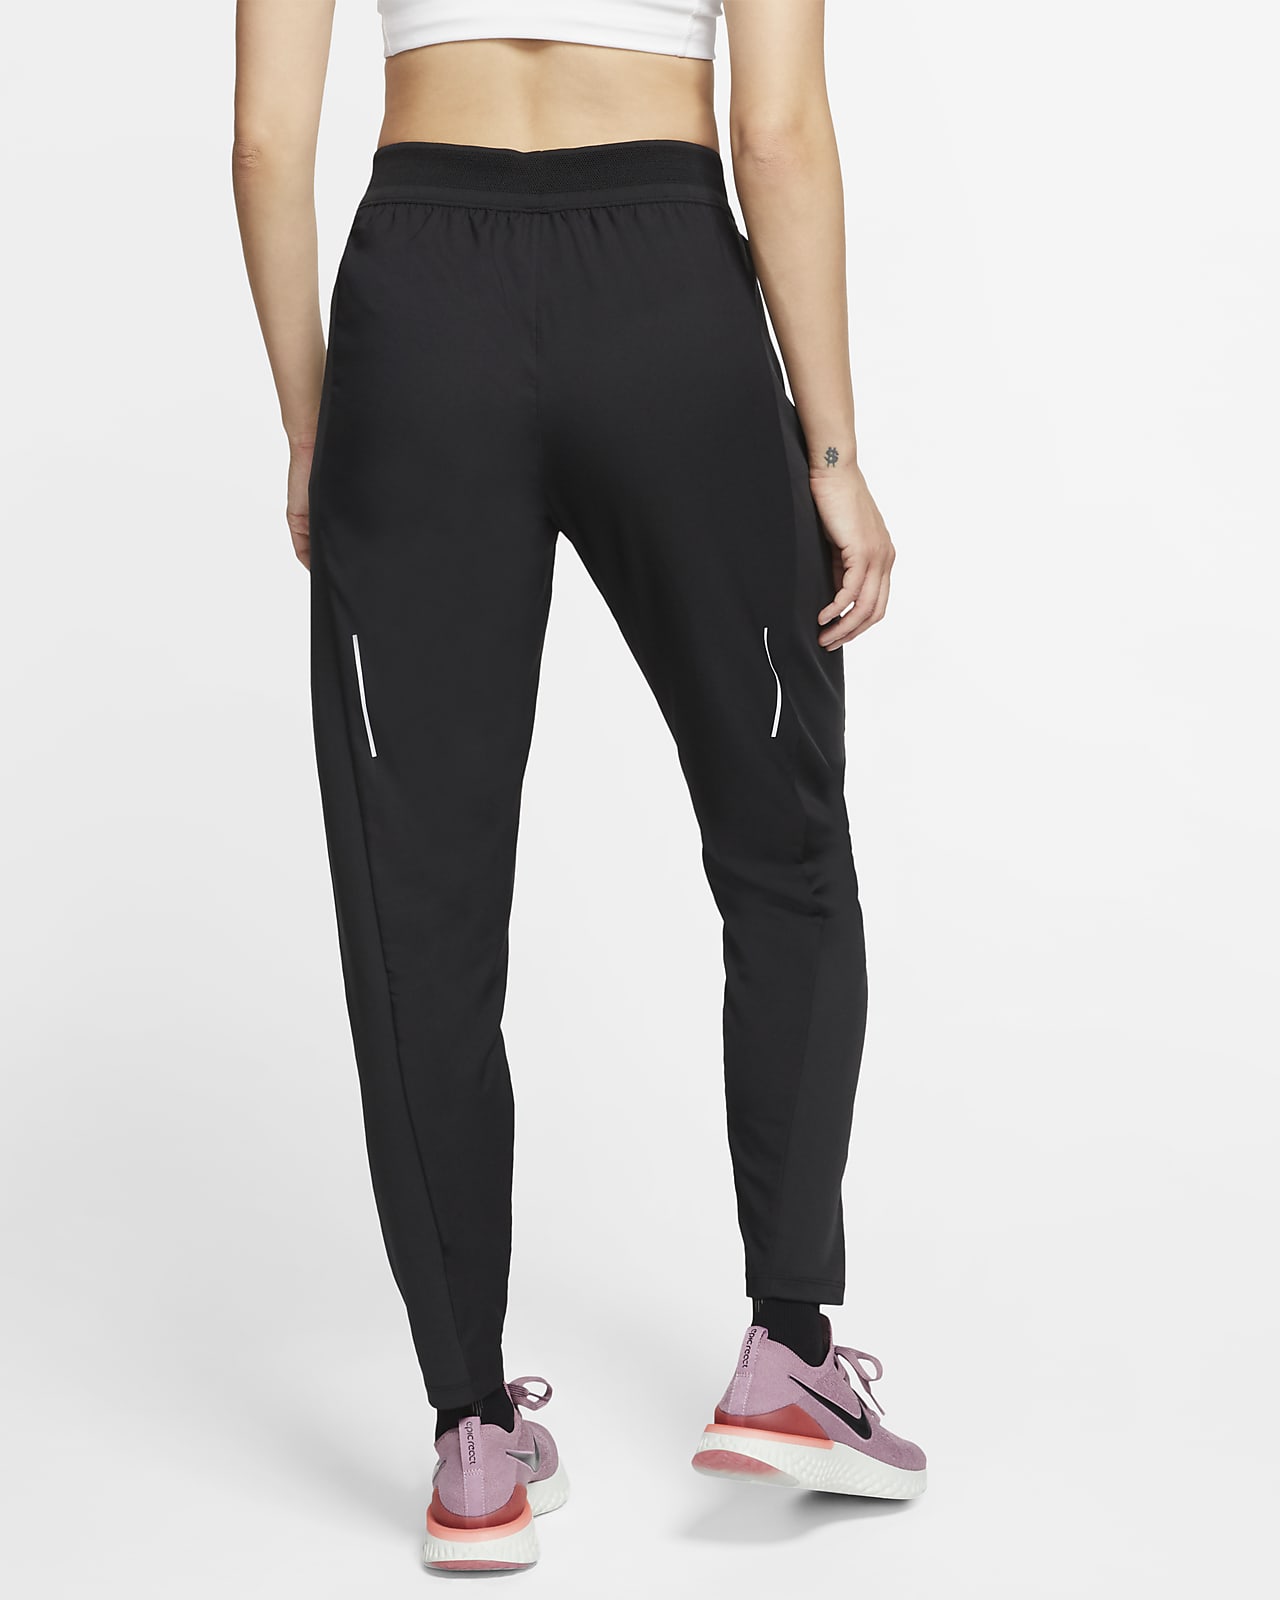 Nike Swift Women's Running Pants. Nike.com